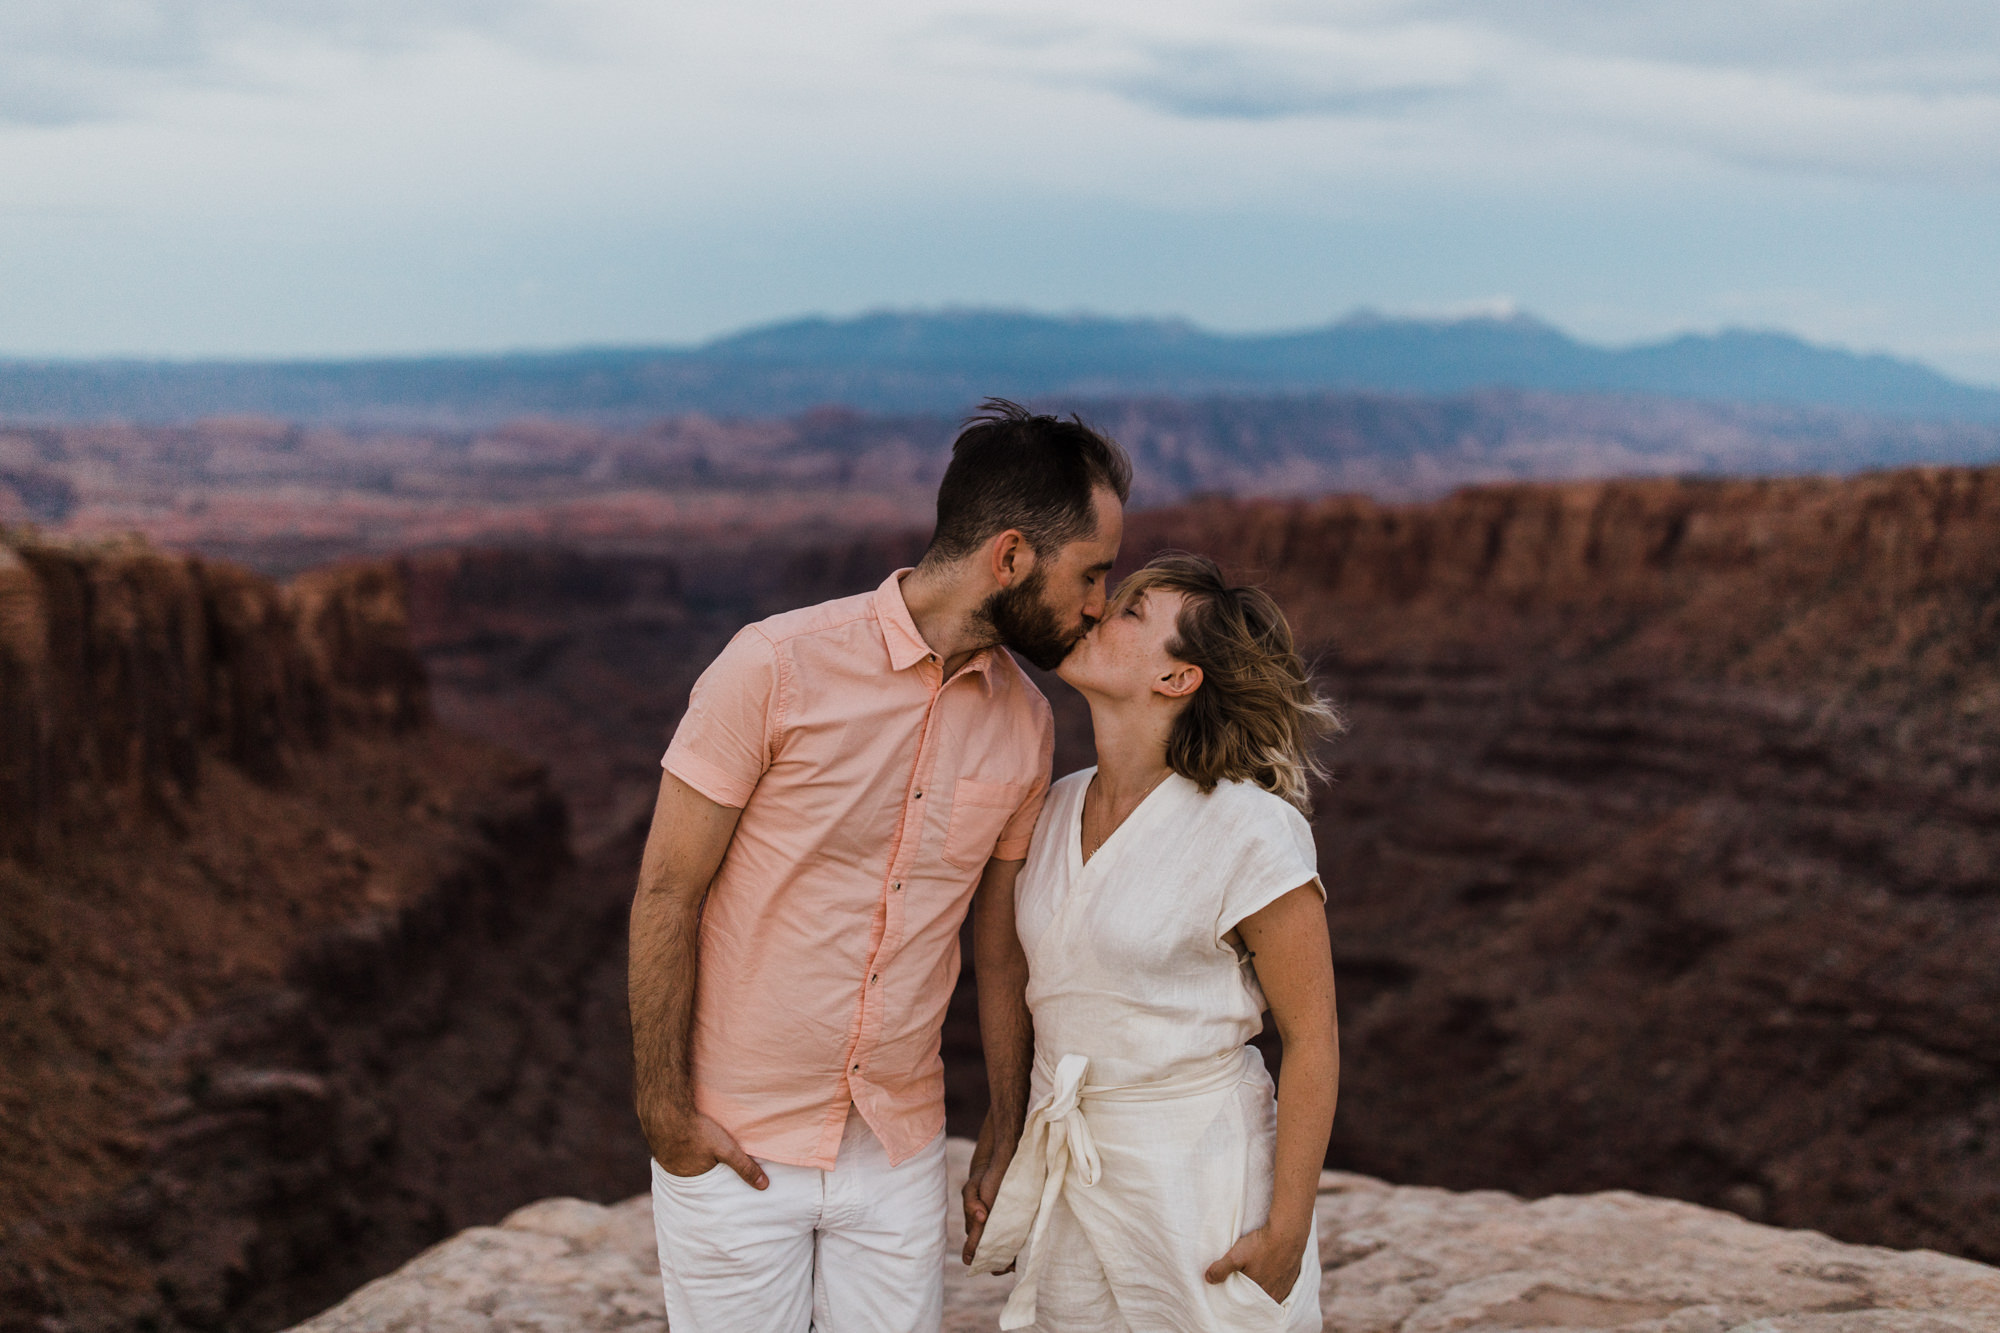 moab, utah adventurous elopement | utah intimate wedding photographer | jumpsuit bride | desert wedding inspiration | the hearnes adventure photography